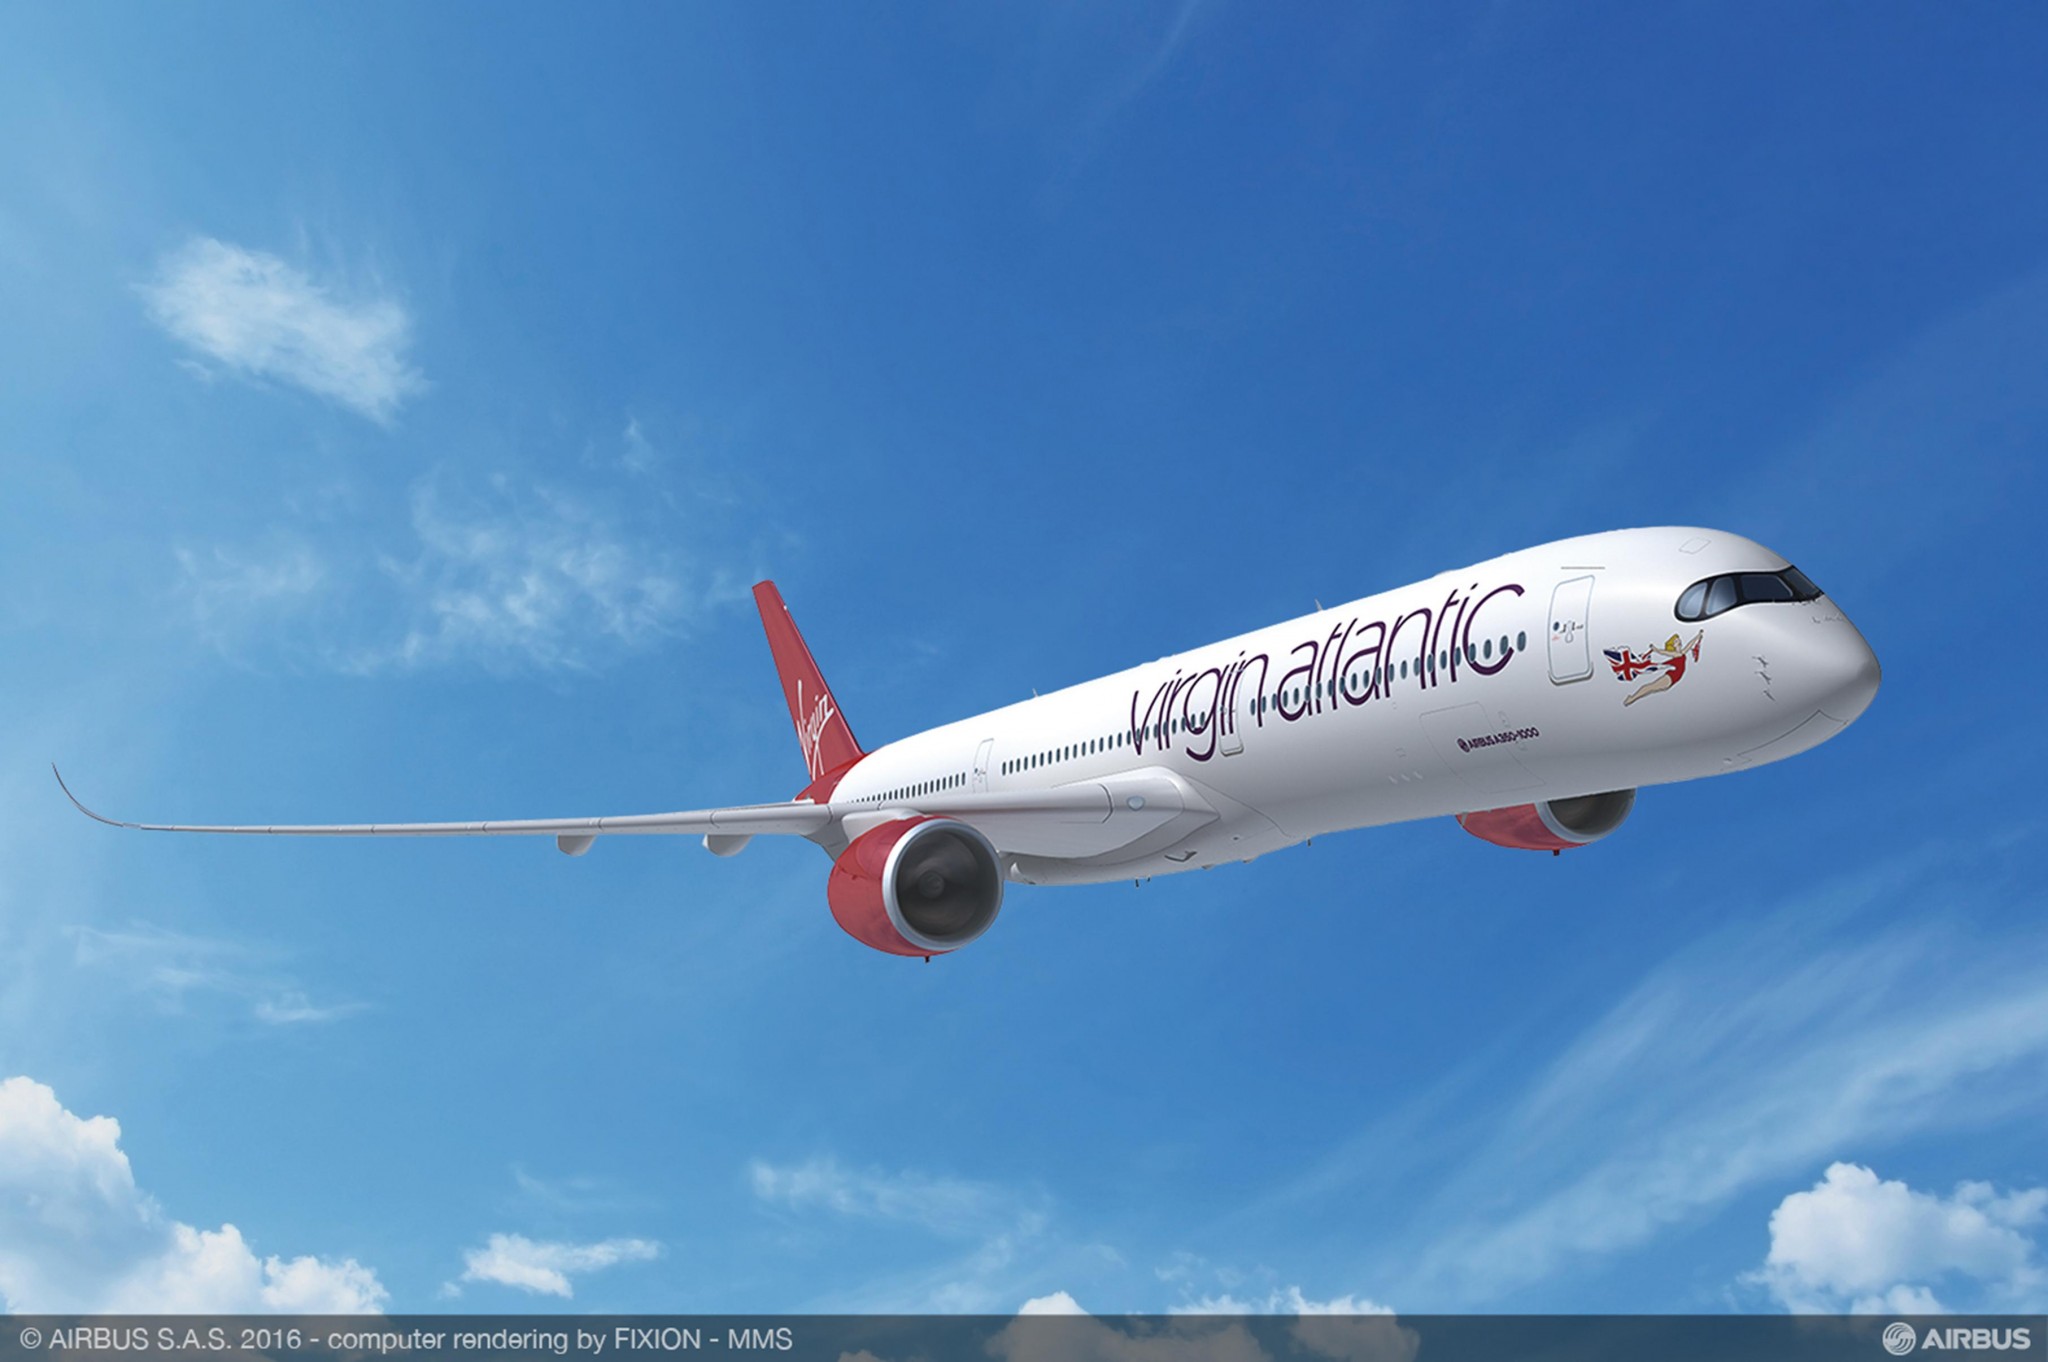 Virgin Atlantic to cease flying between Dubai and London Heathrow